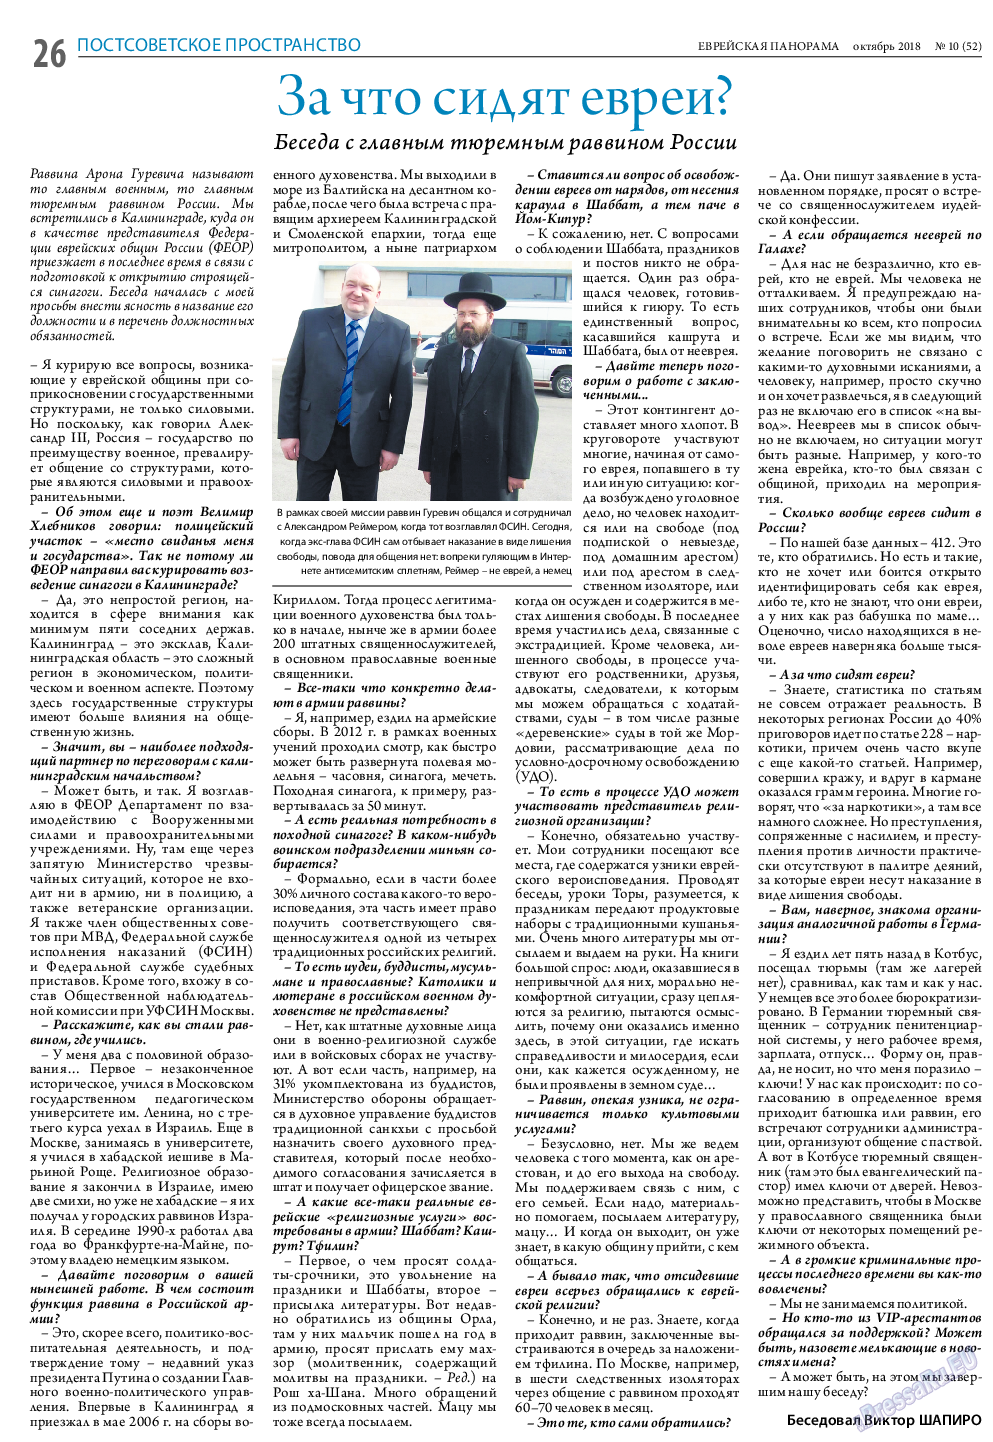 Еврейская панорама, газета. 2018 №10 стр.26